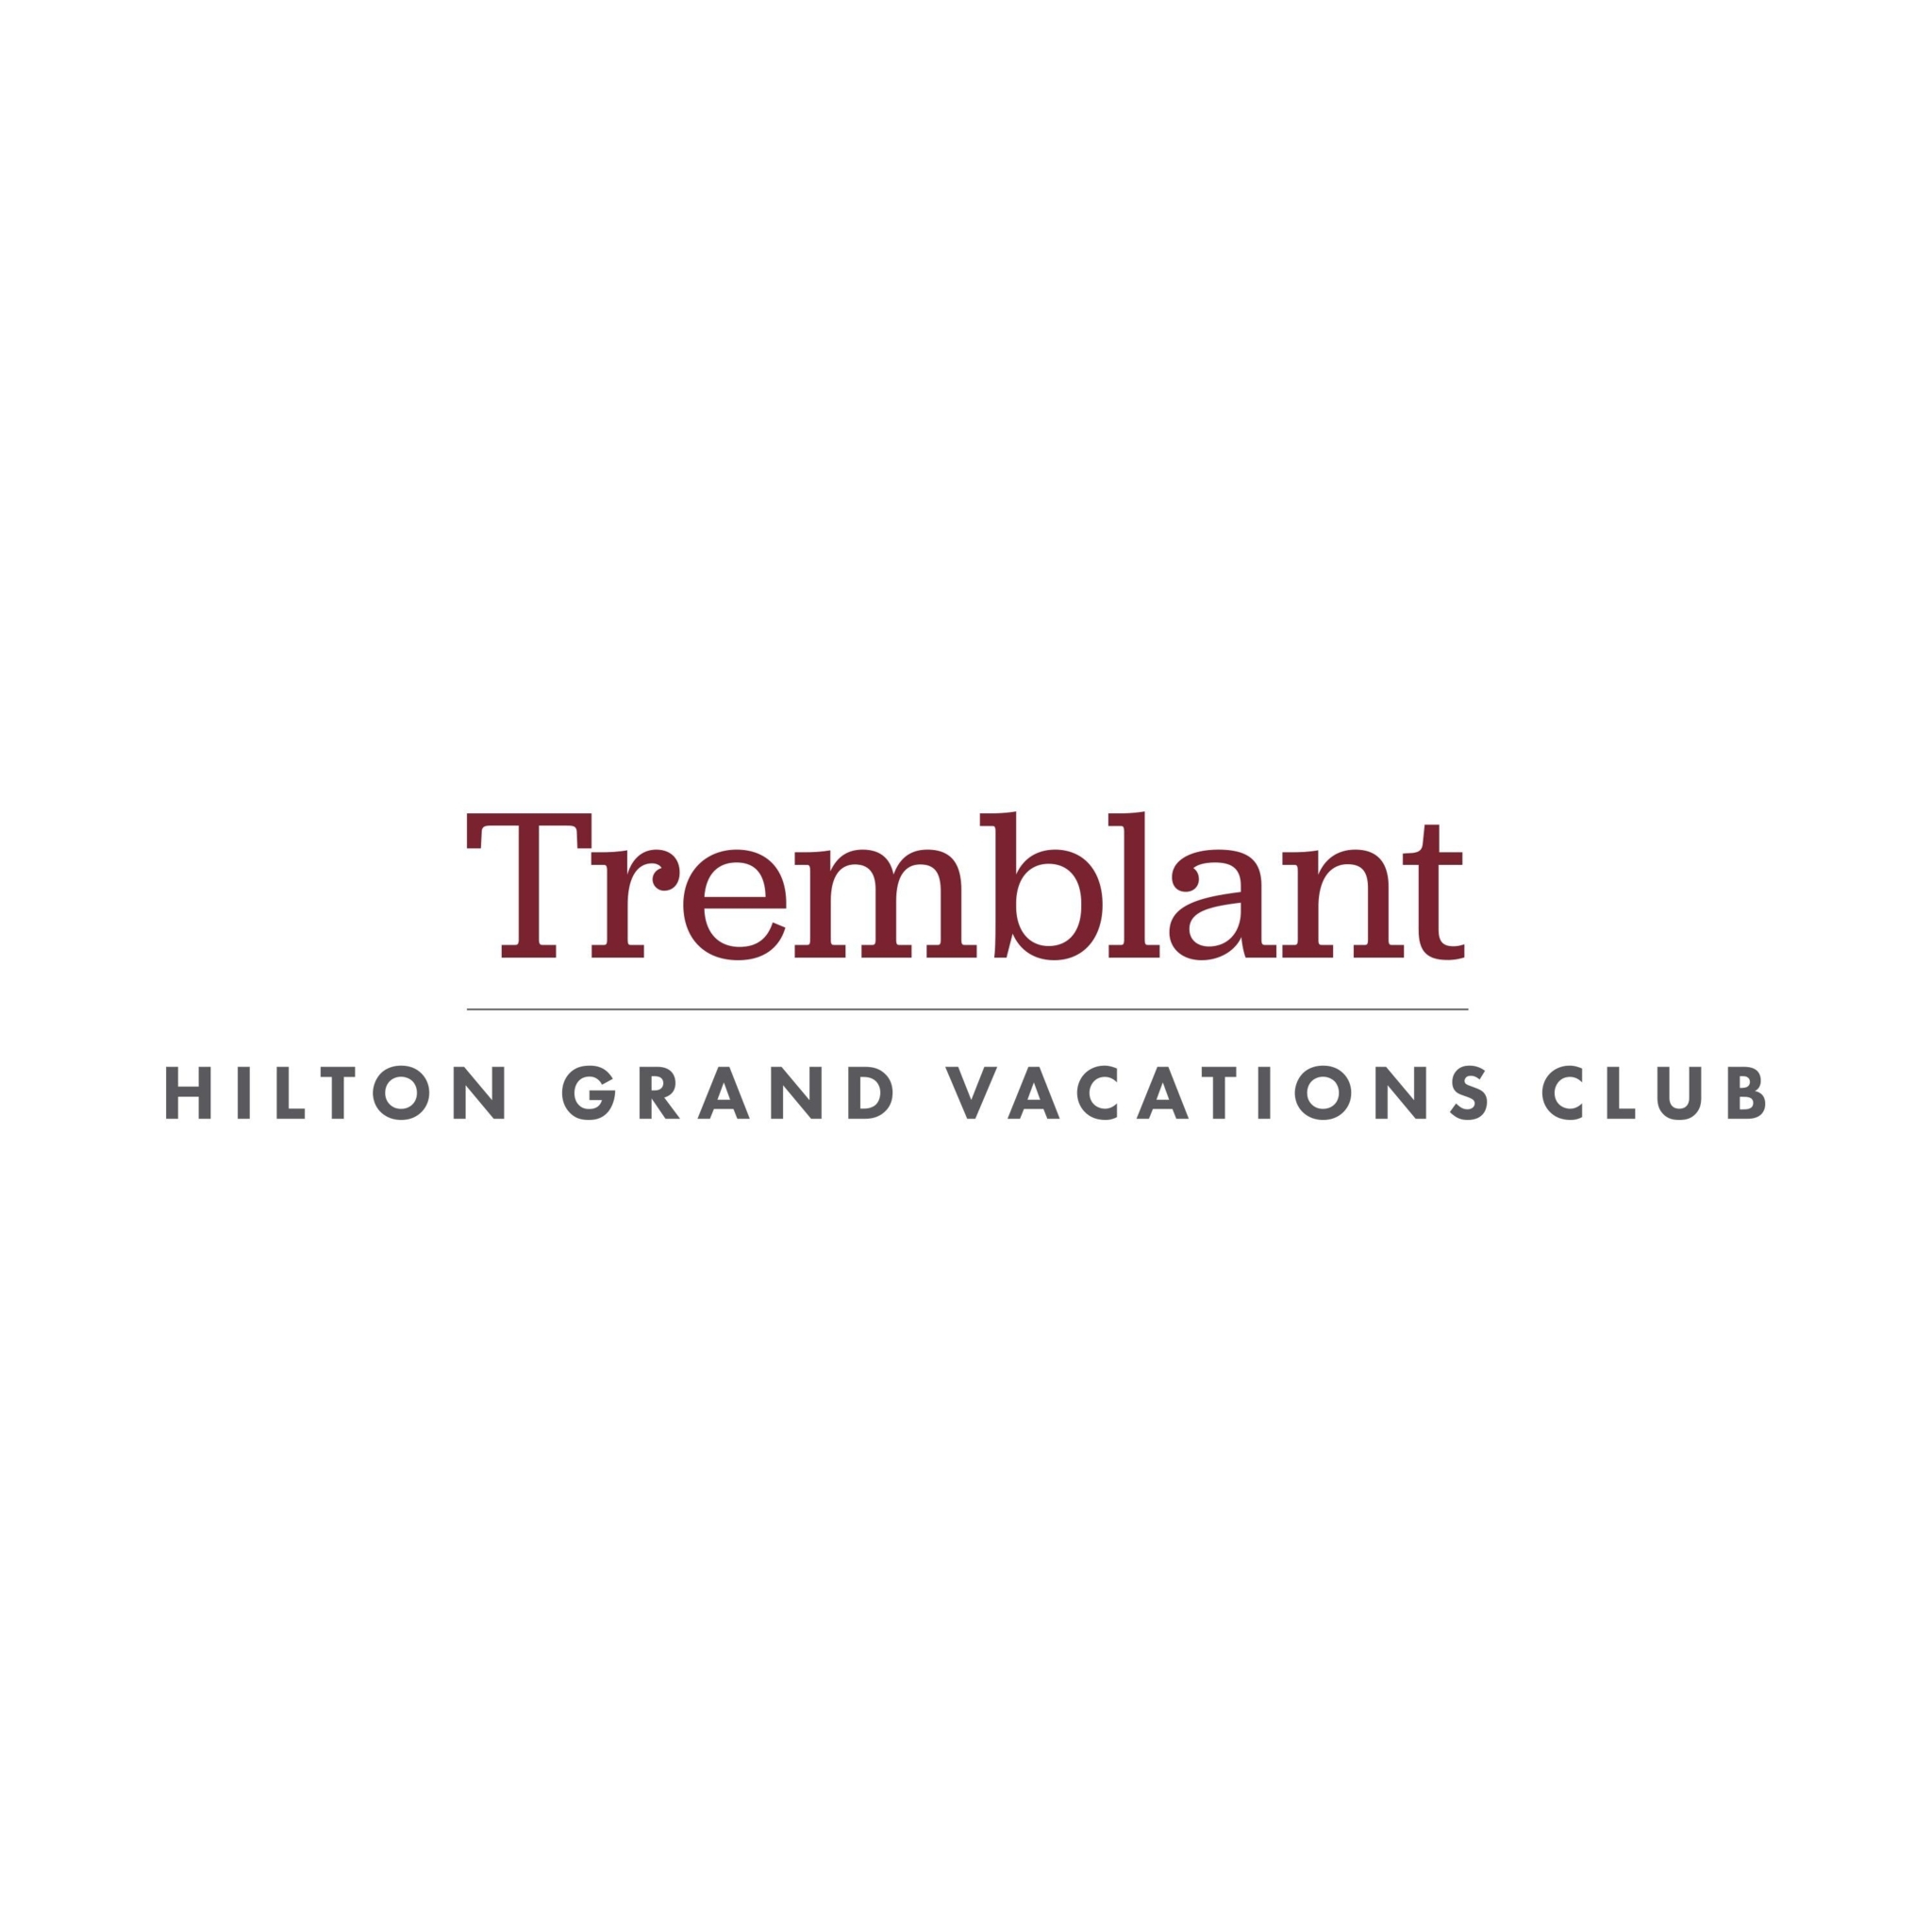 Hilton Grand Vacations Club Tremblant Canada - Hotels